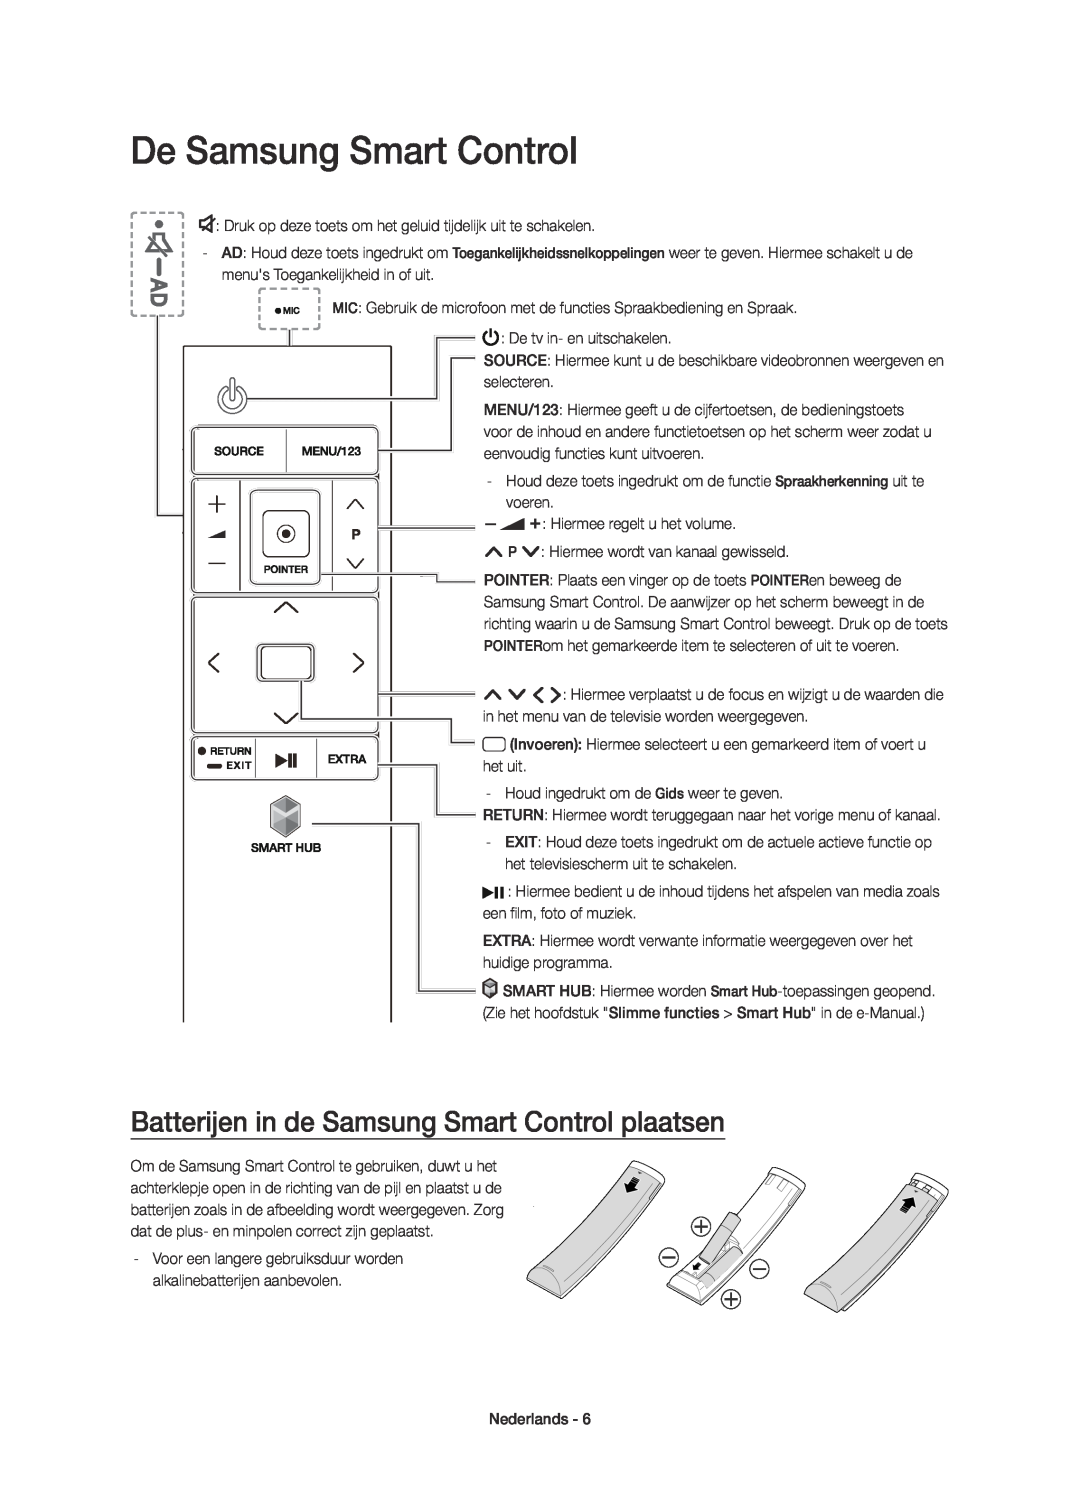 Samsung UE55JU6750UXZG, UE40JU6750UXZG manual De Samsung Smart Control, Batterijen in de Samsung Smart Control plaatsen 